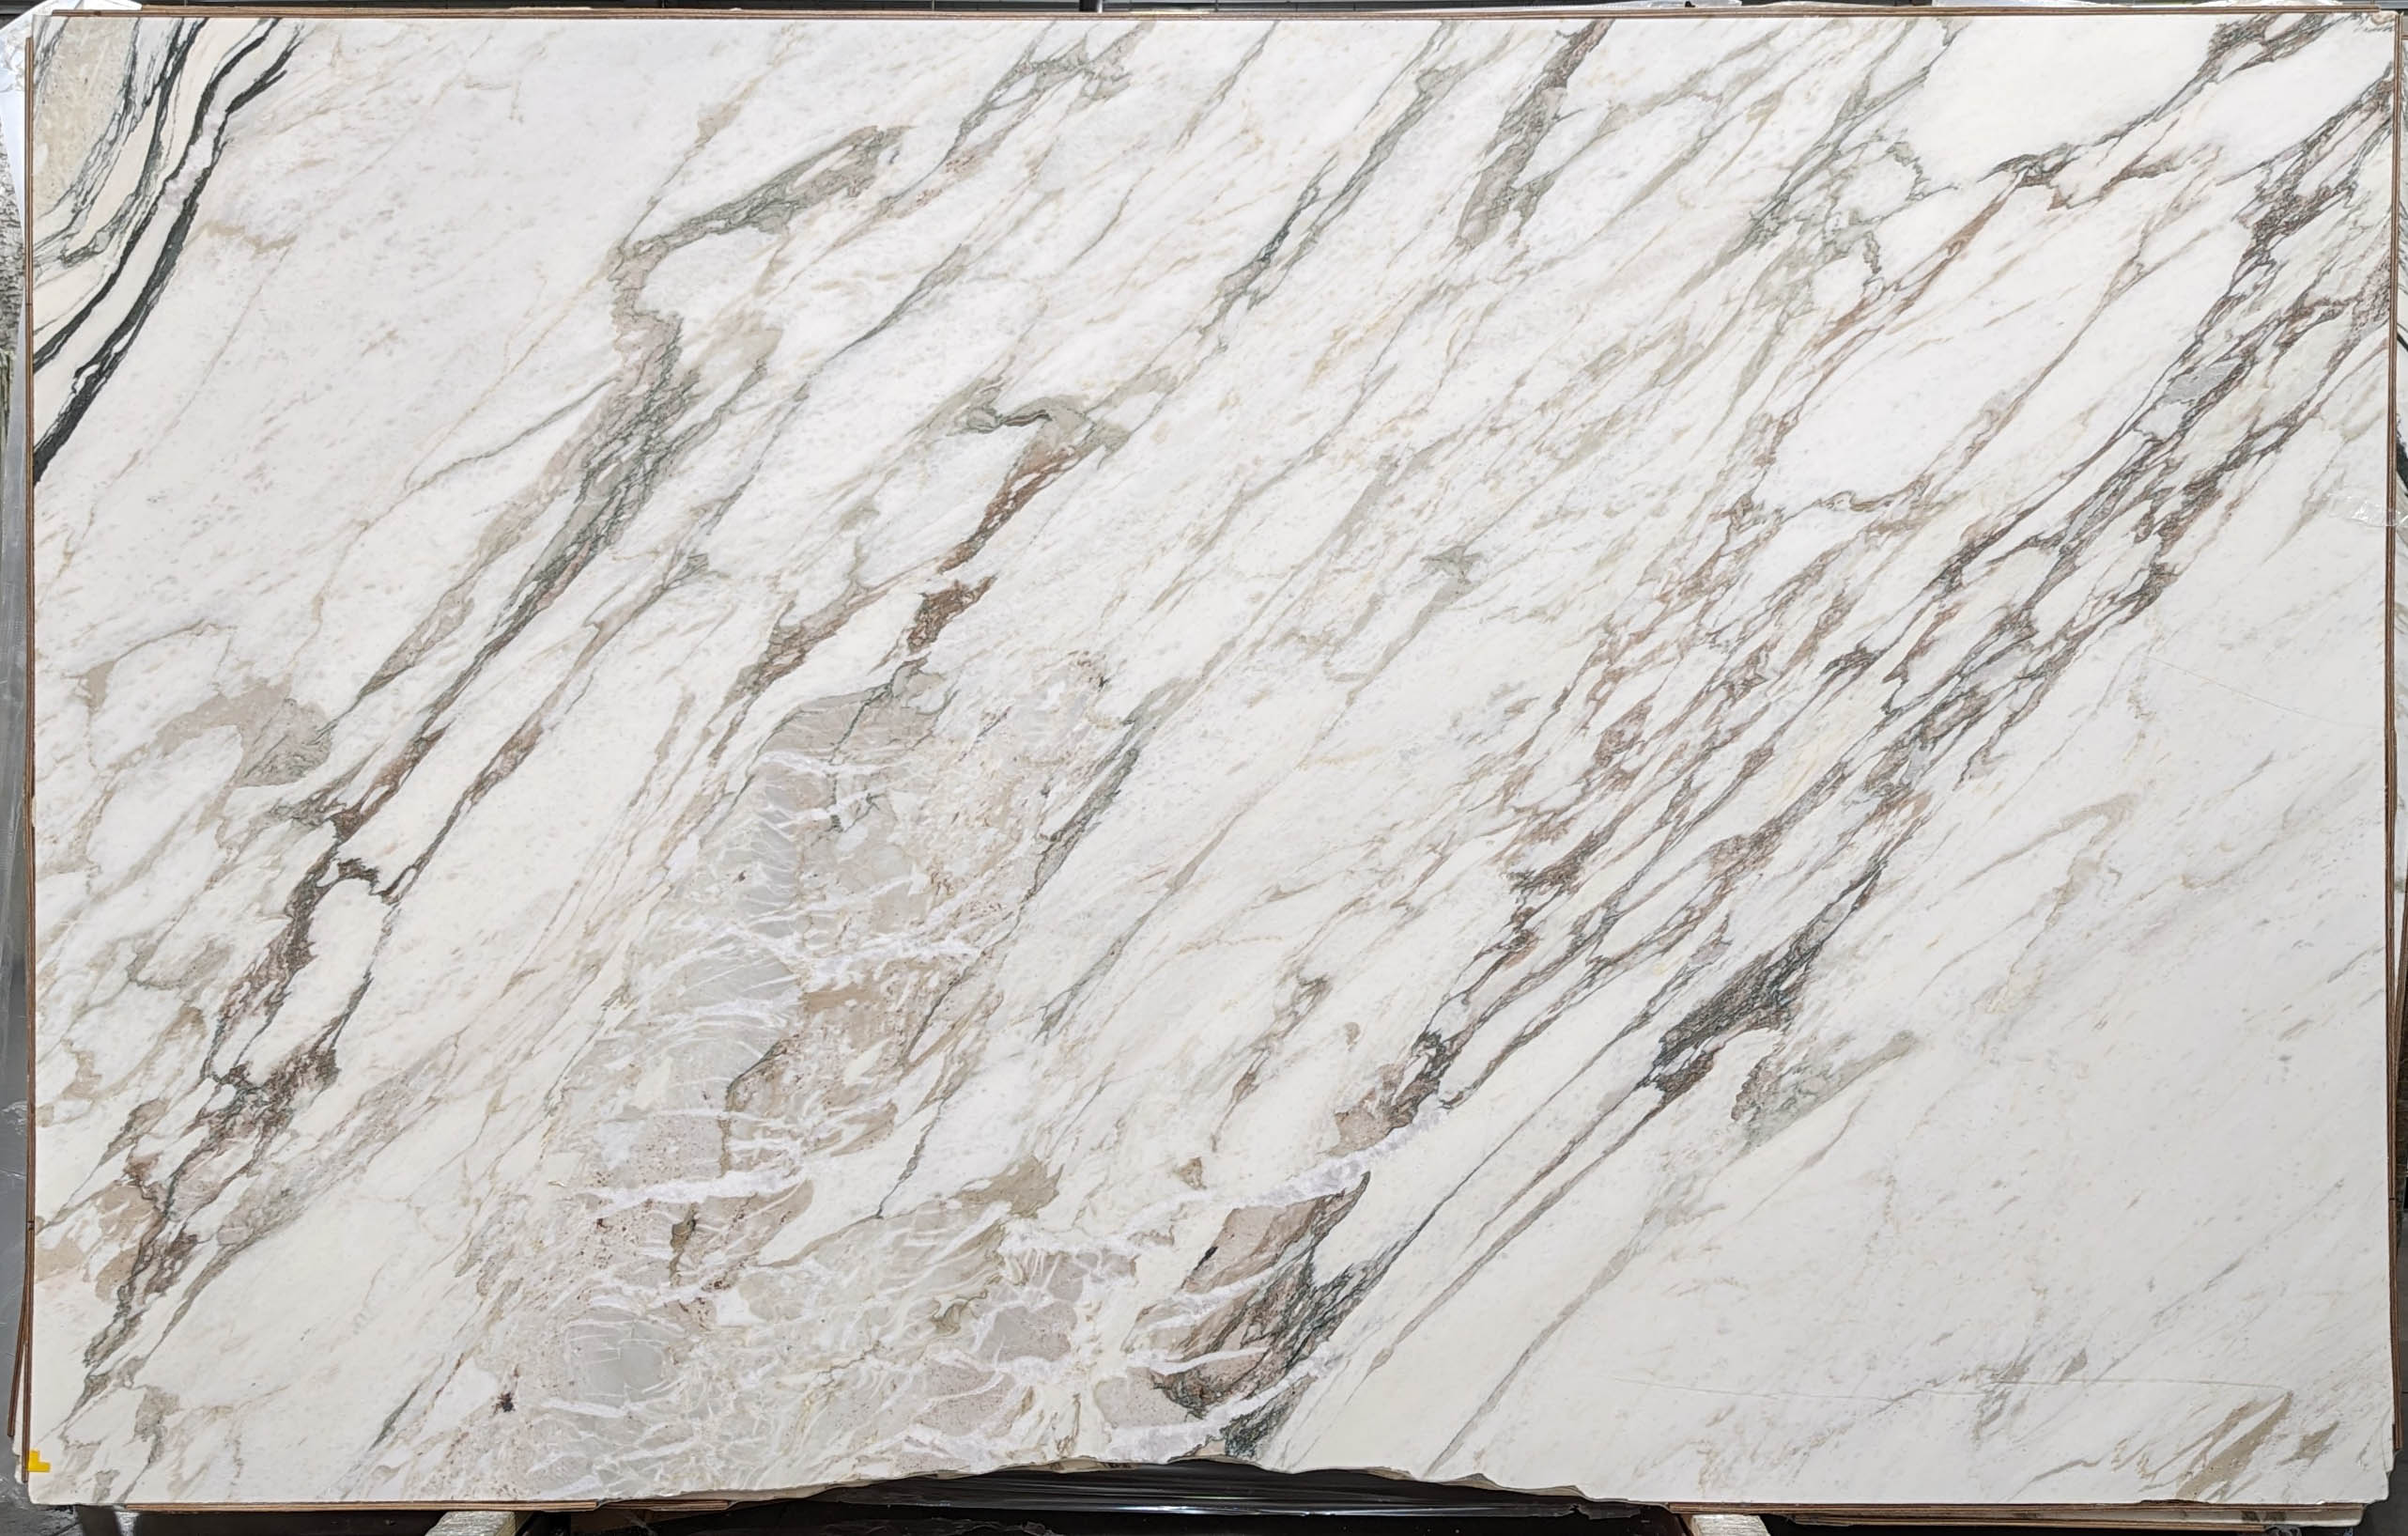  Calacatta Imperiale Marble Slab 3/4  Honed Stone - 4028#19 -  72x119 